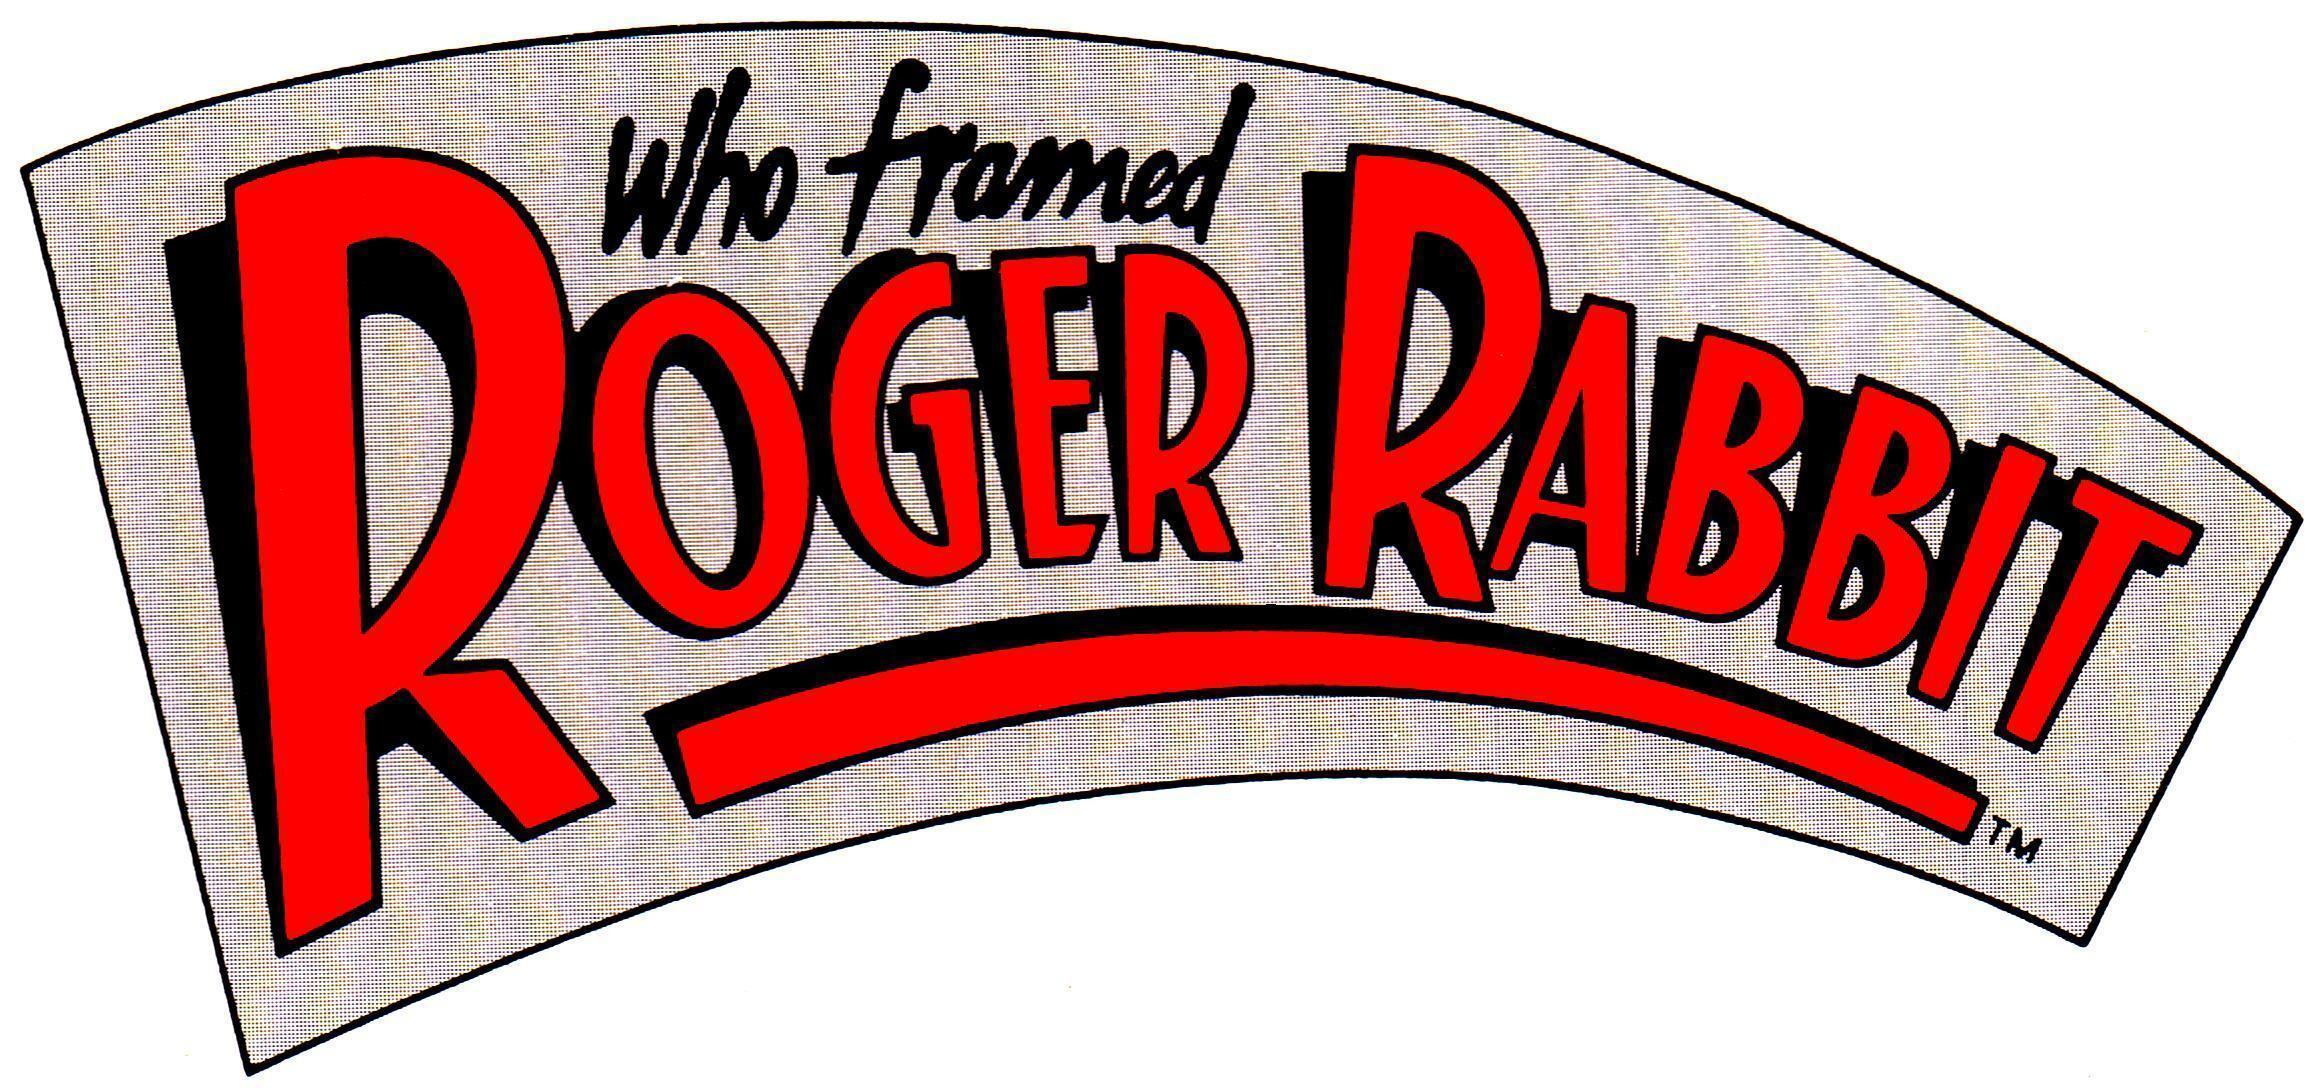 Jessica Rabbit Logo - Roger Rabbit Wallpaper